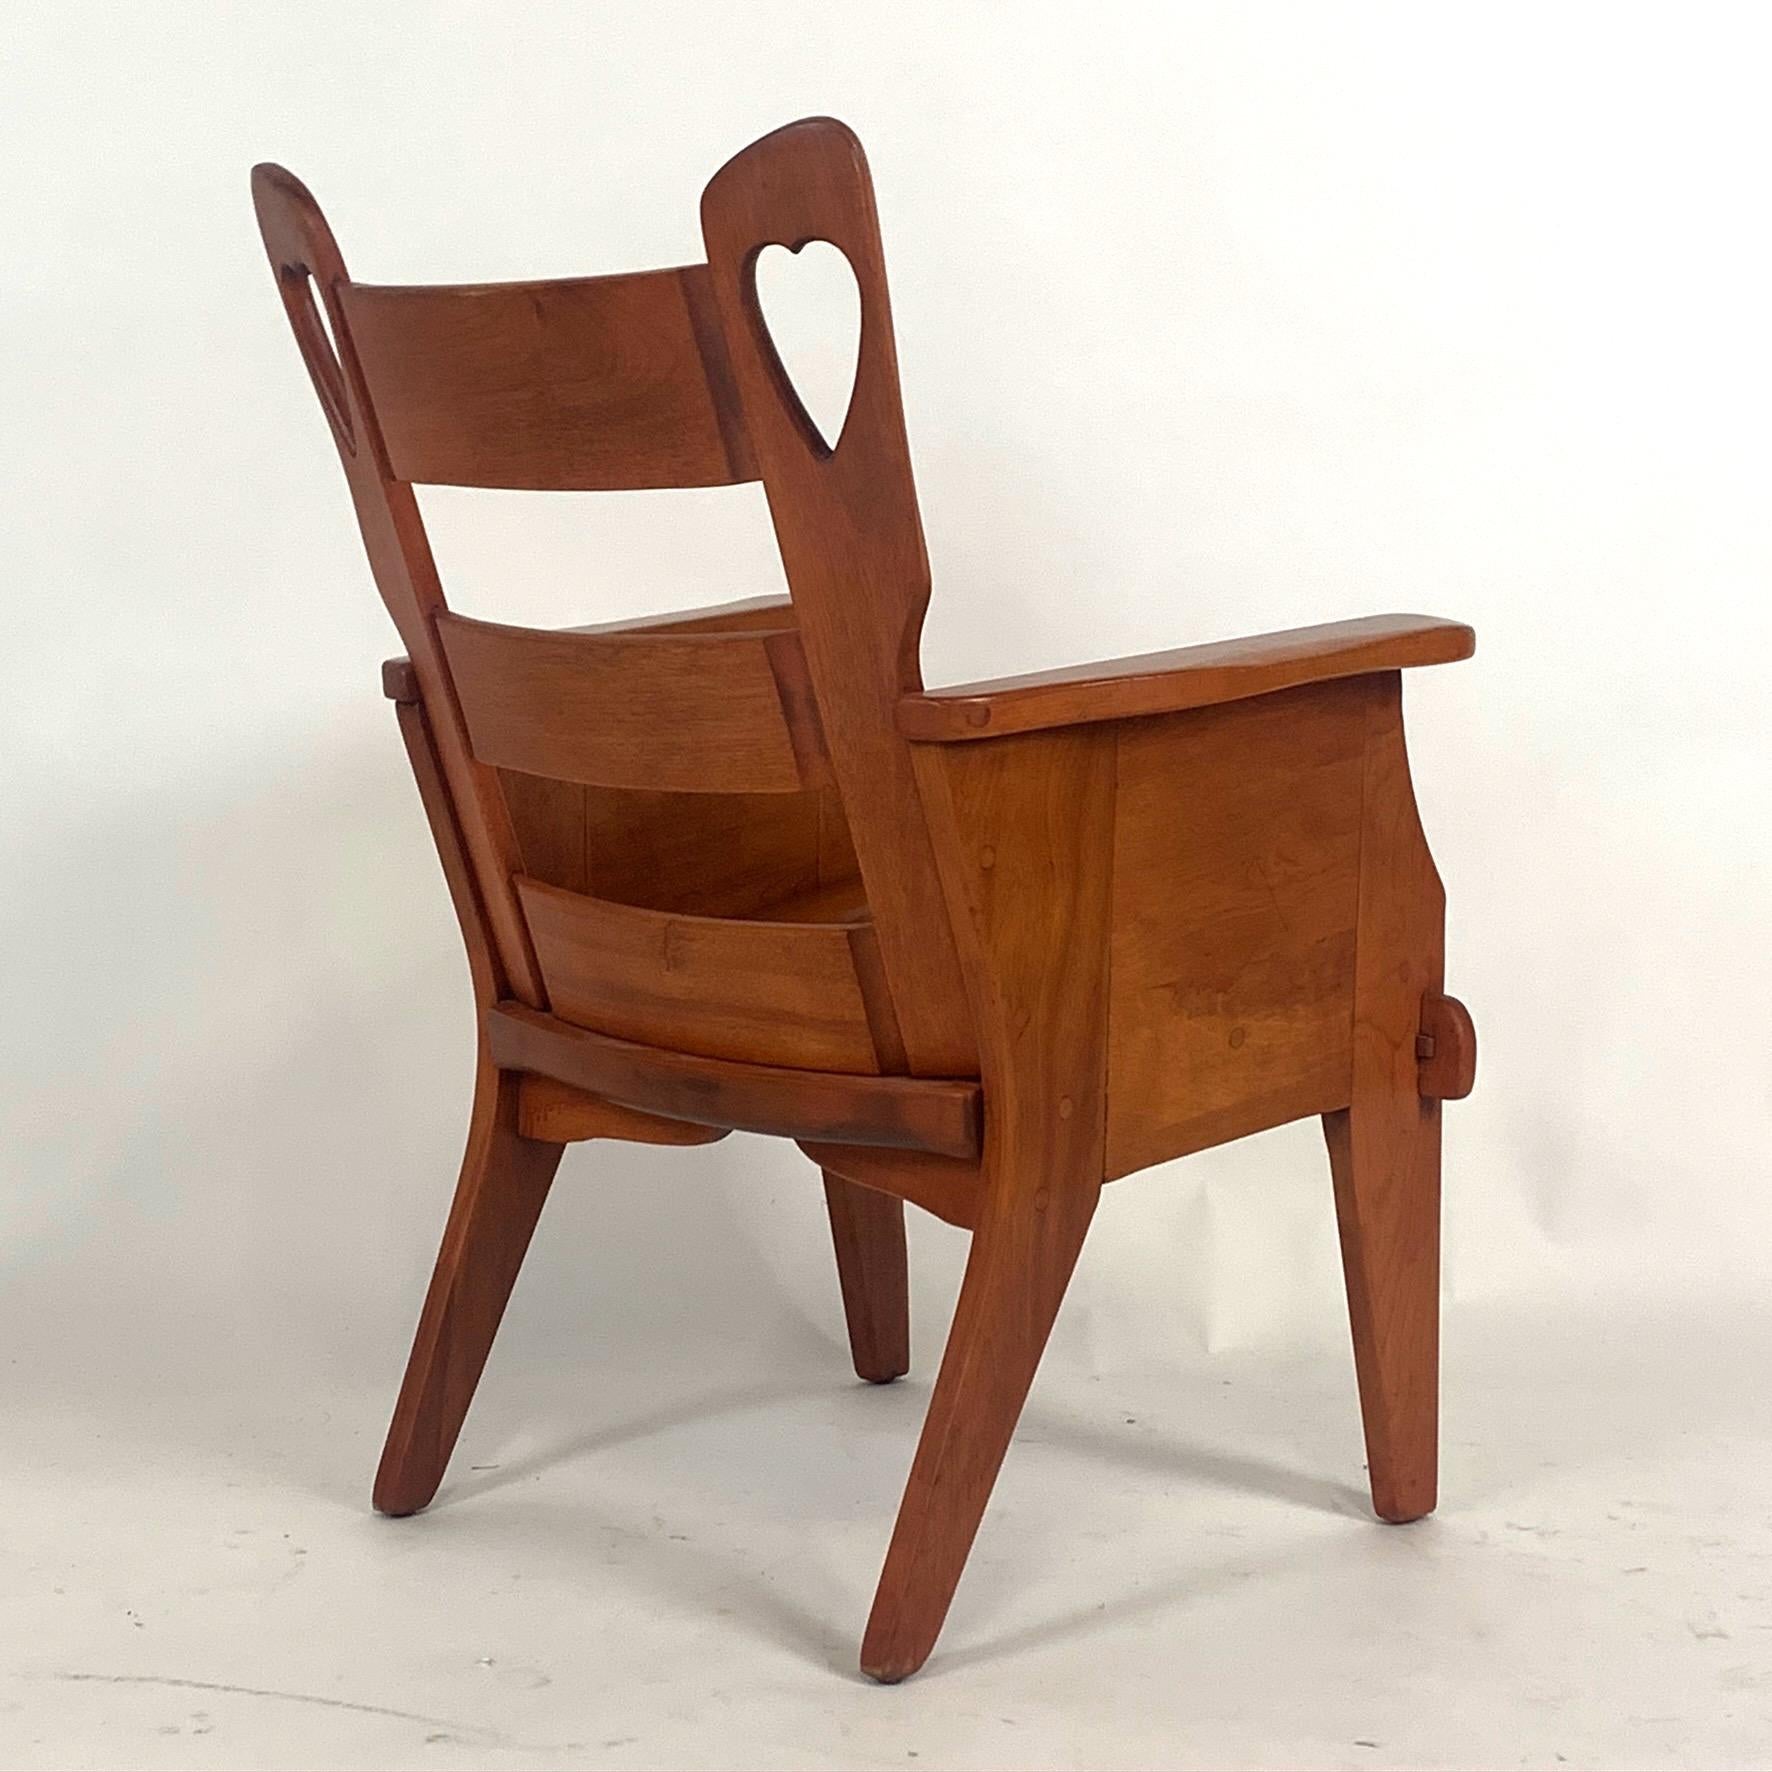 Carved Rare & Whimsical Cushman Hard Rock Maple Chair w. Heart Cut-Outs Mortise & Tenon